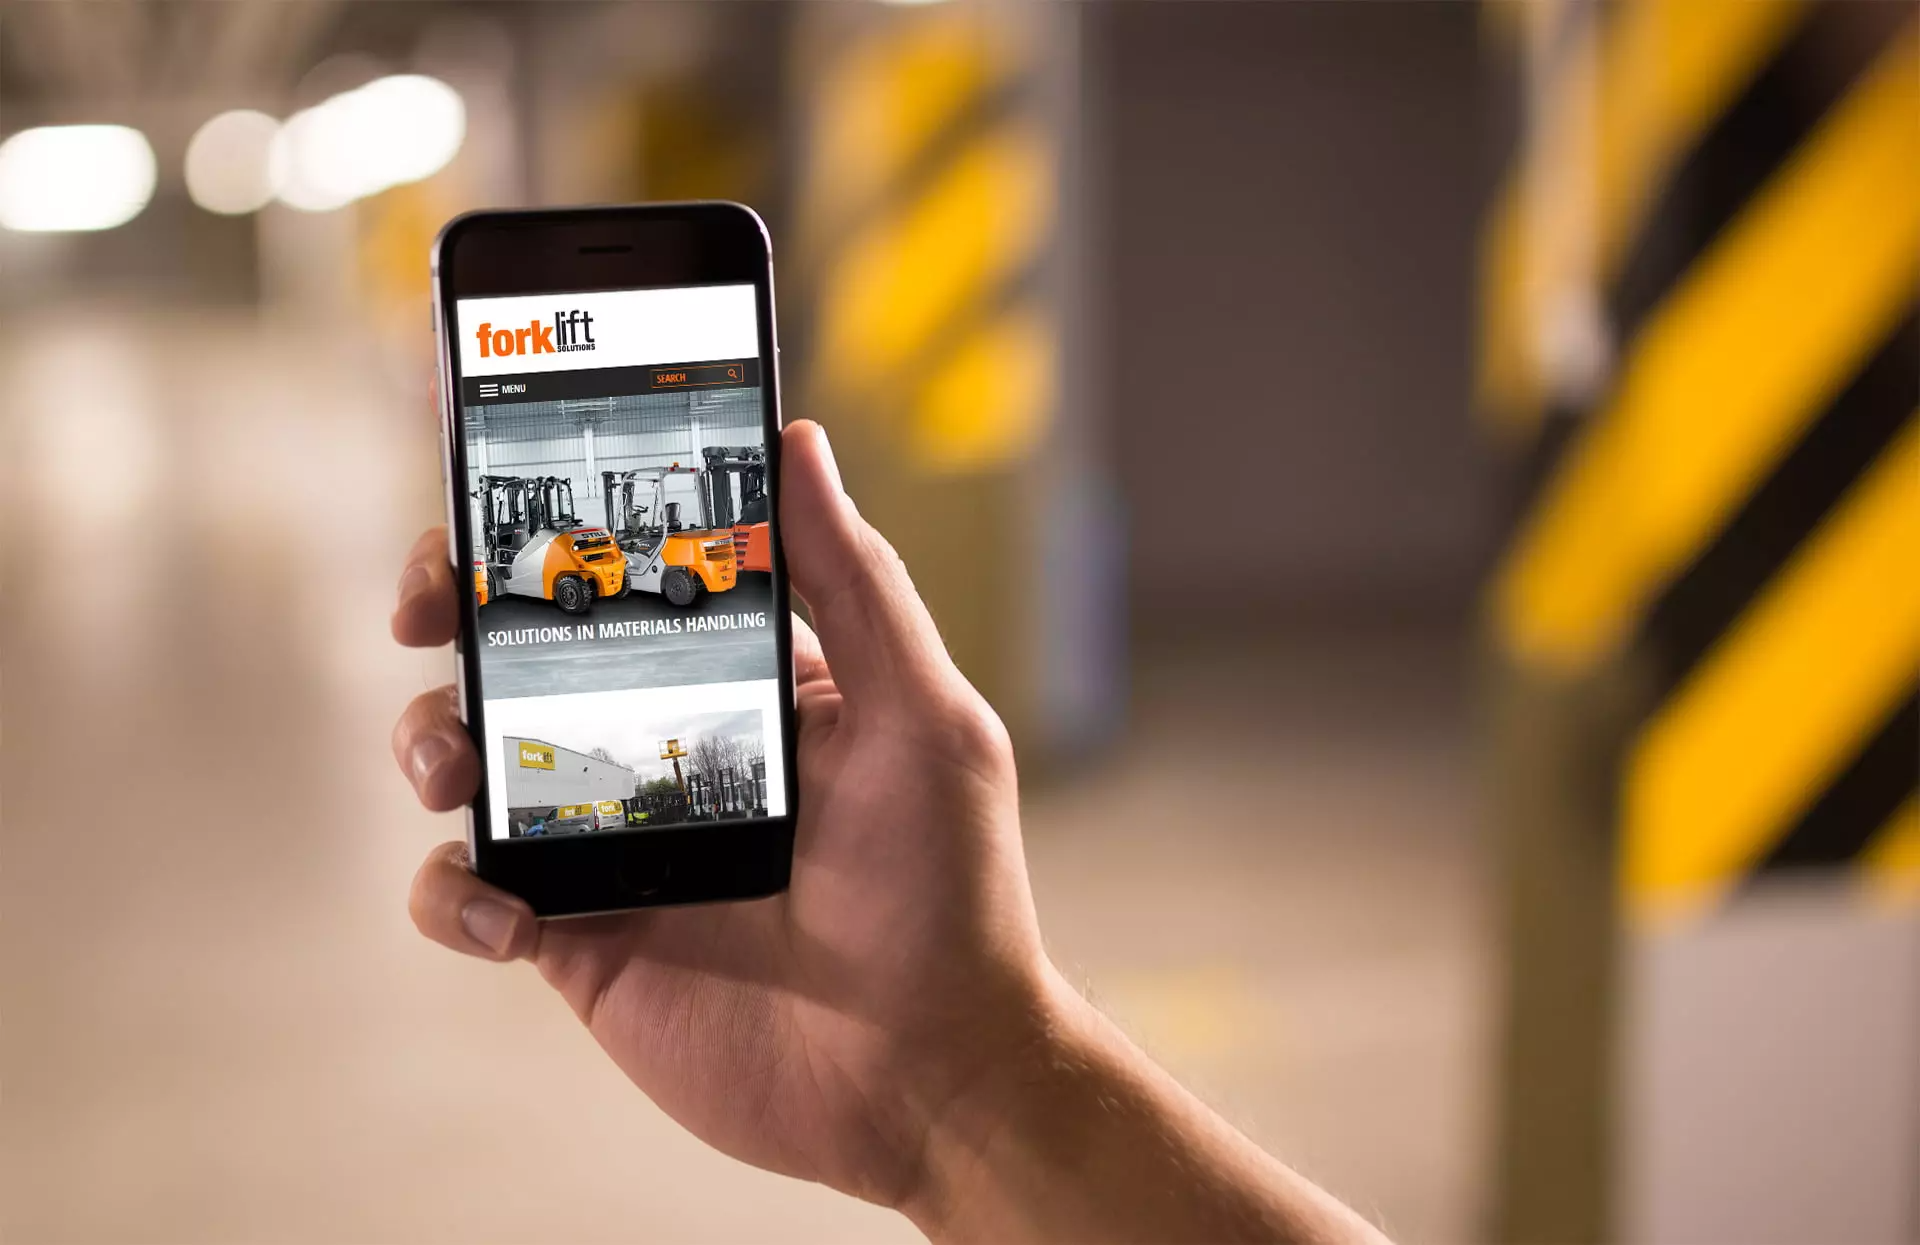 Forklift Solutions website displayed on mobile device